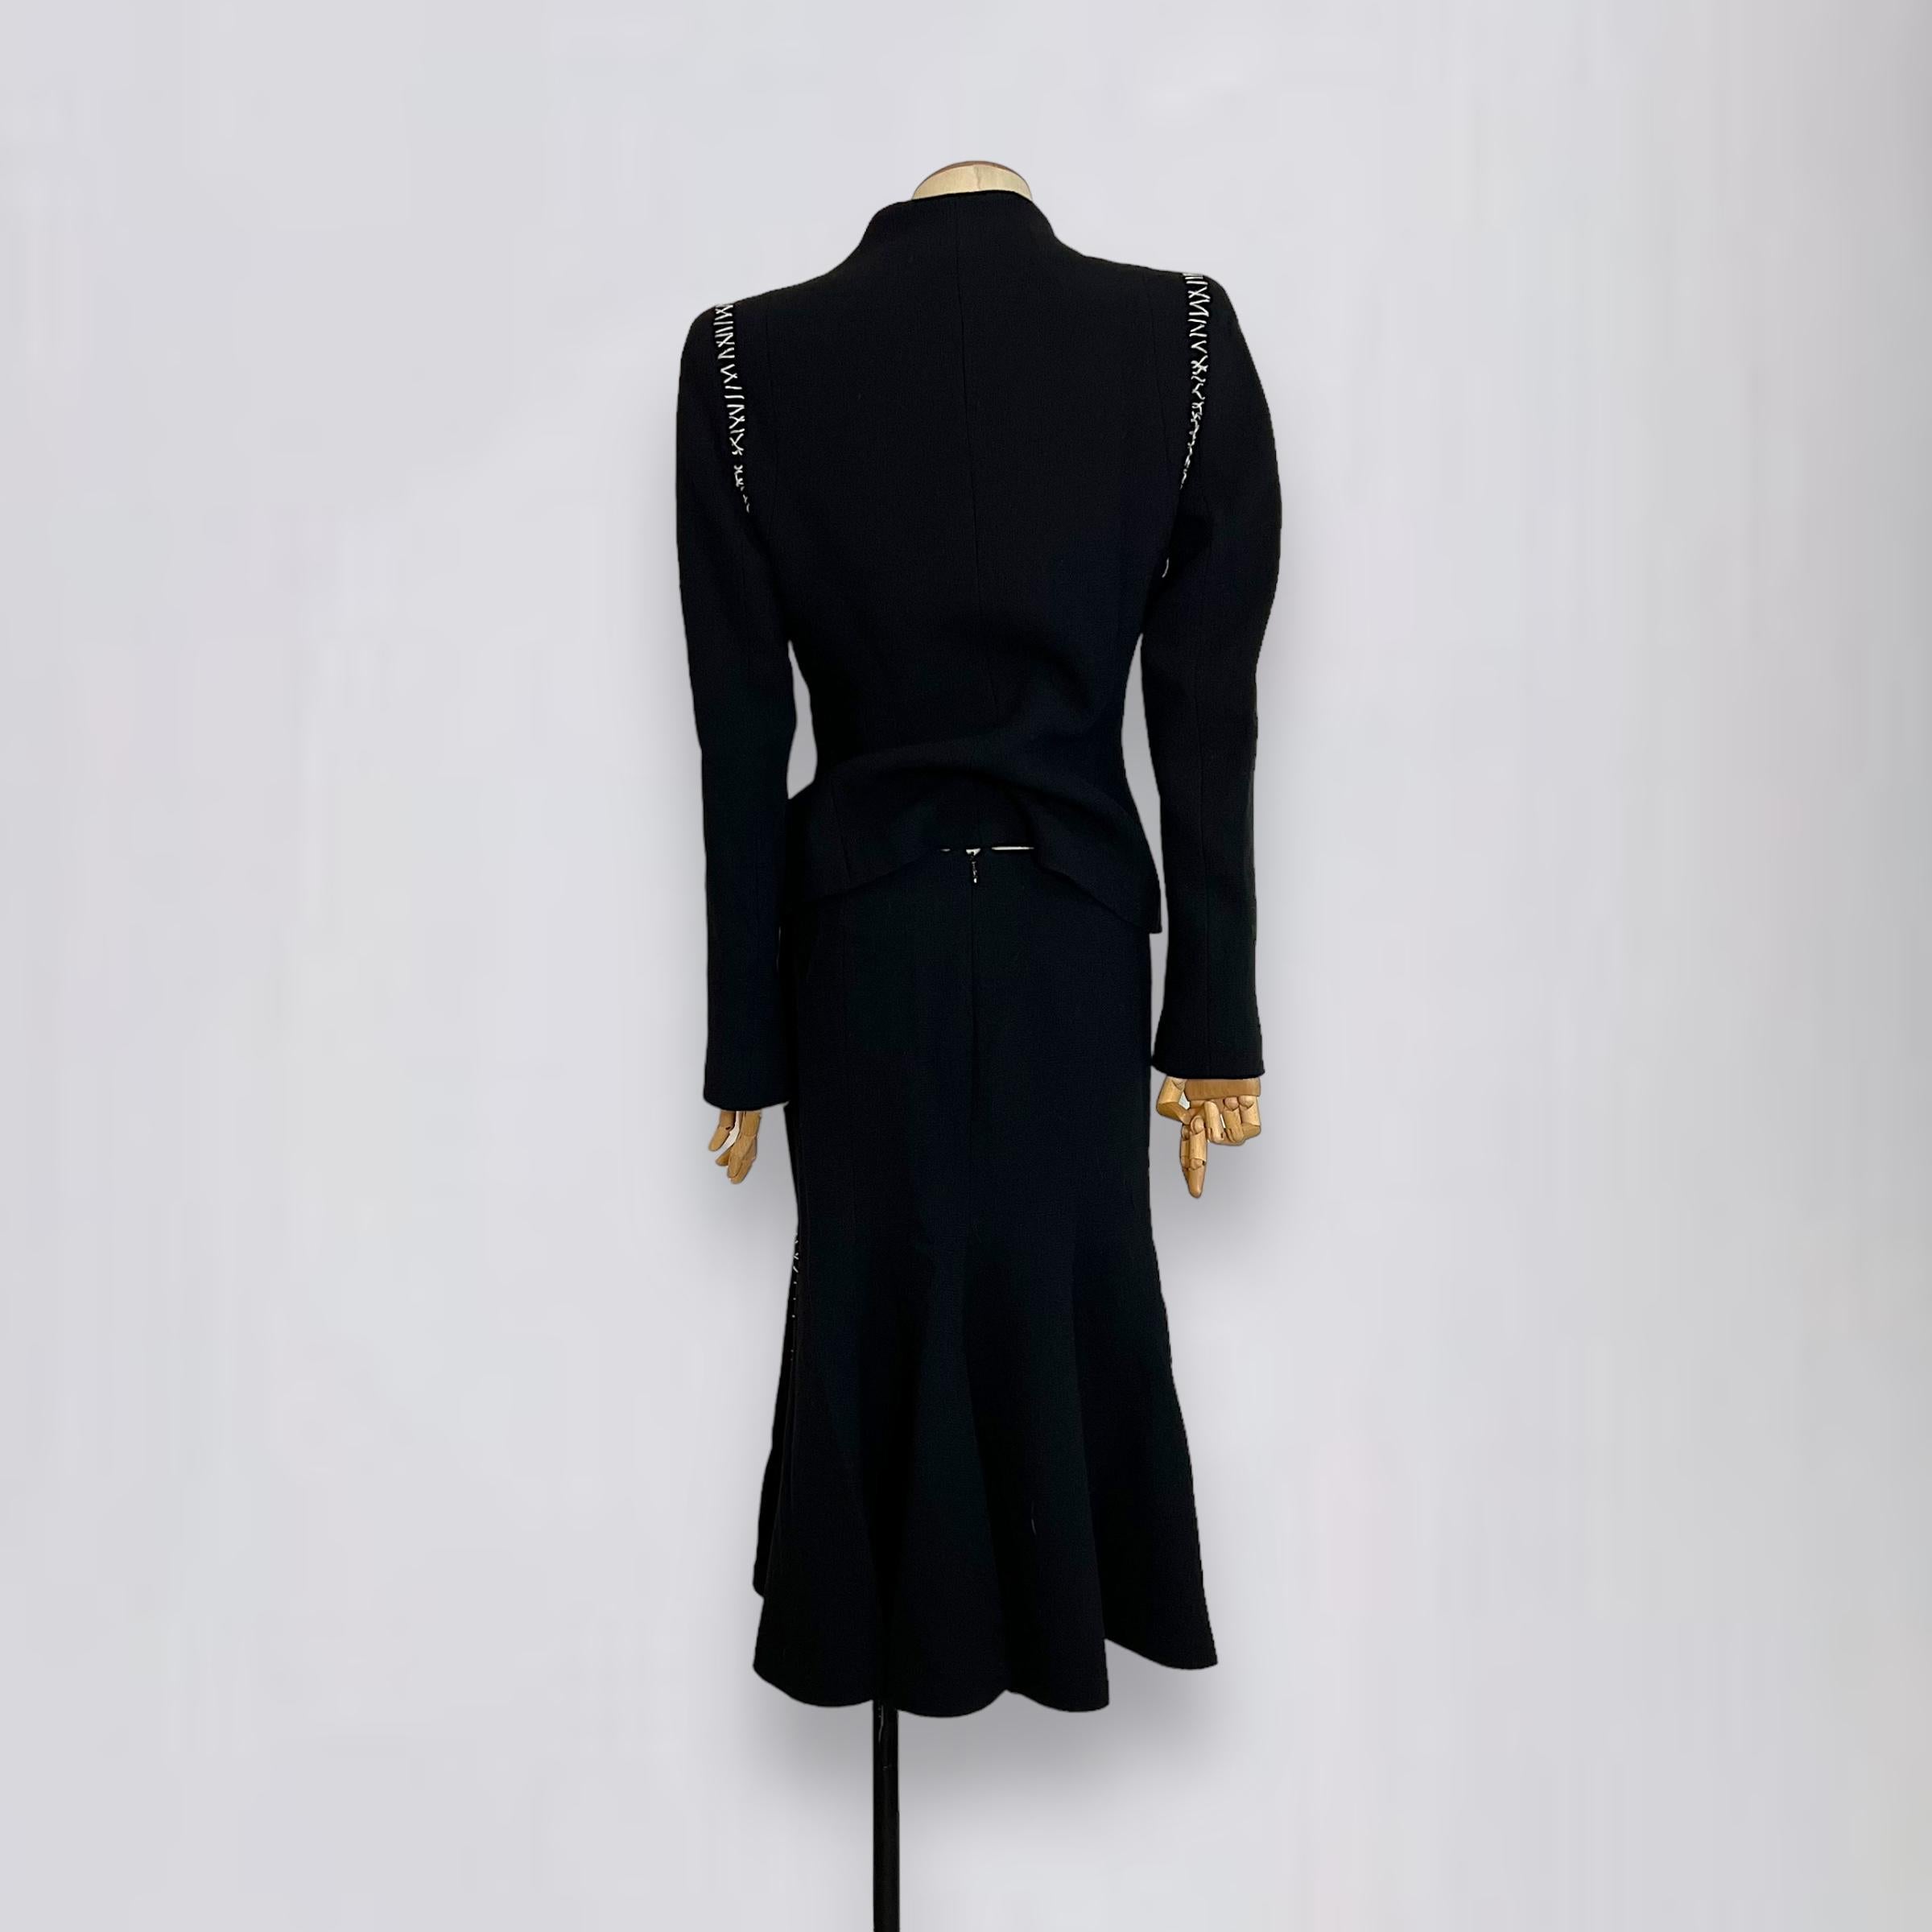 Alexander Mcqueen 2004 black tailor stitches suit For Sale 1